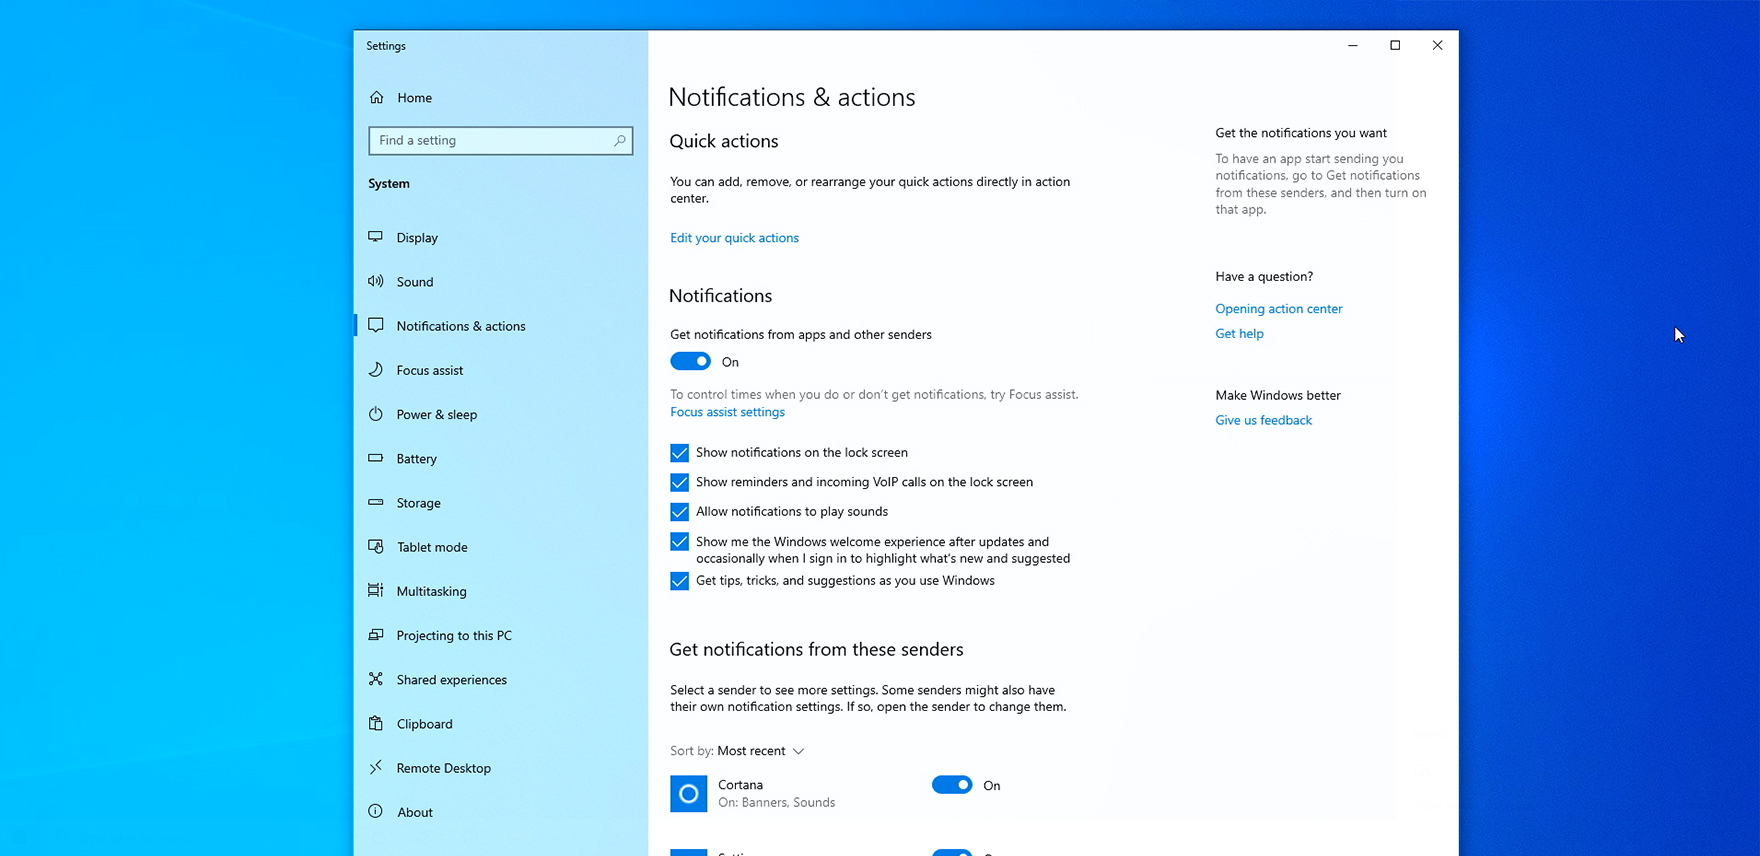 Windows 10 notification settings page